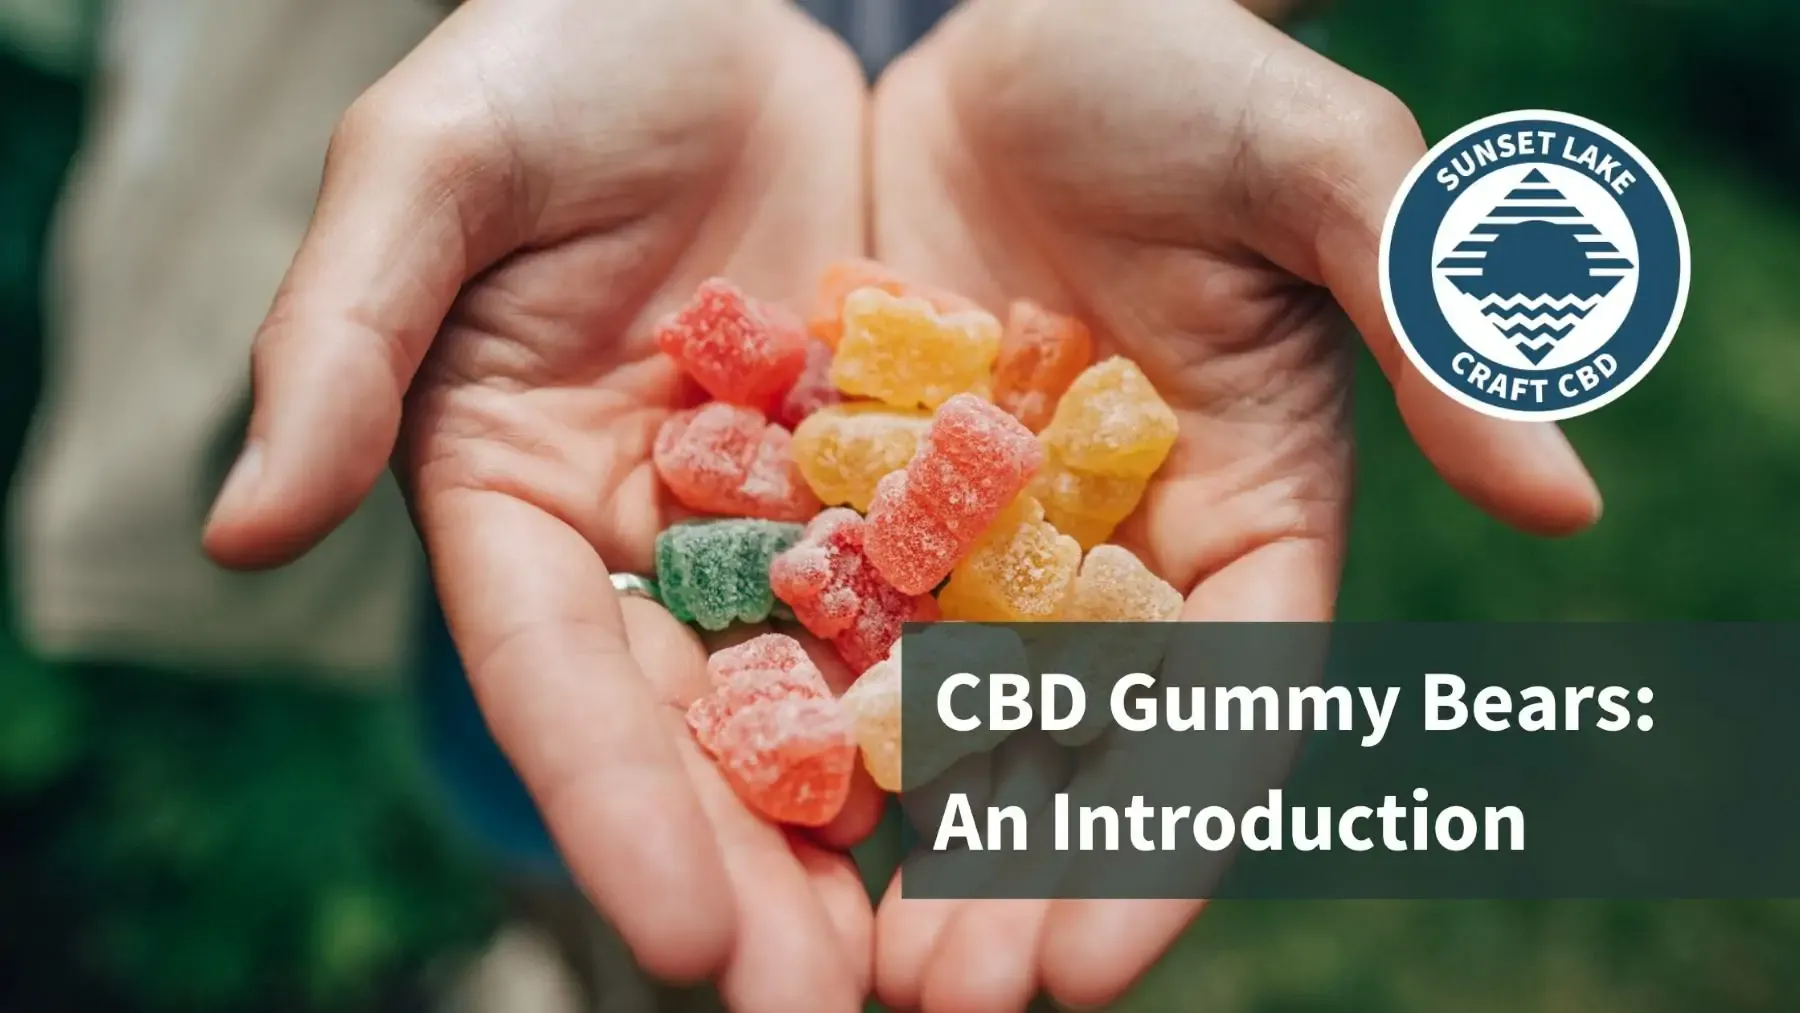 Two hands holding CBD Gummy Bears. Text reads "CBD Gummy Bears: An Introduction"